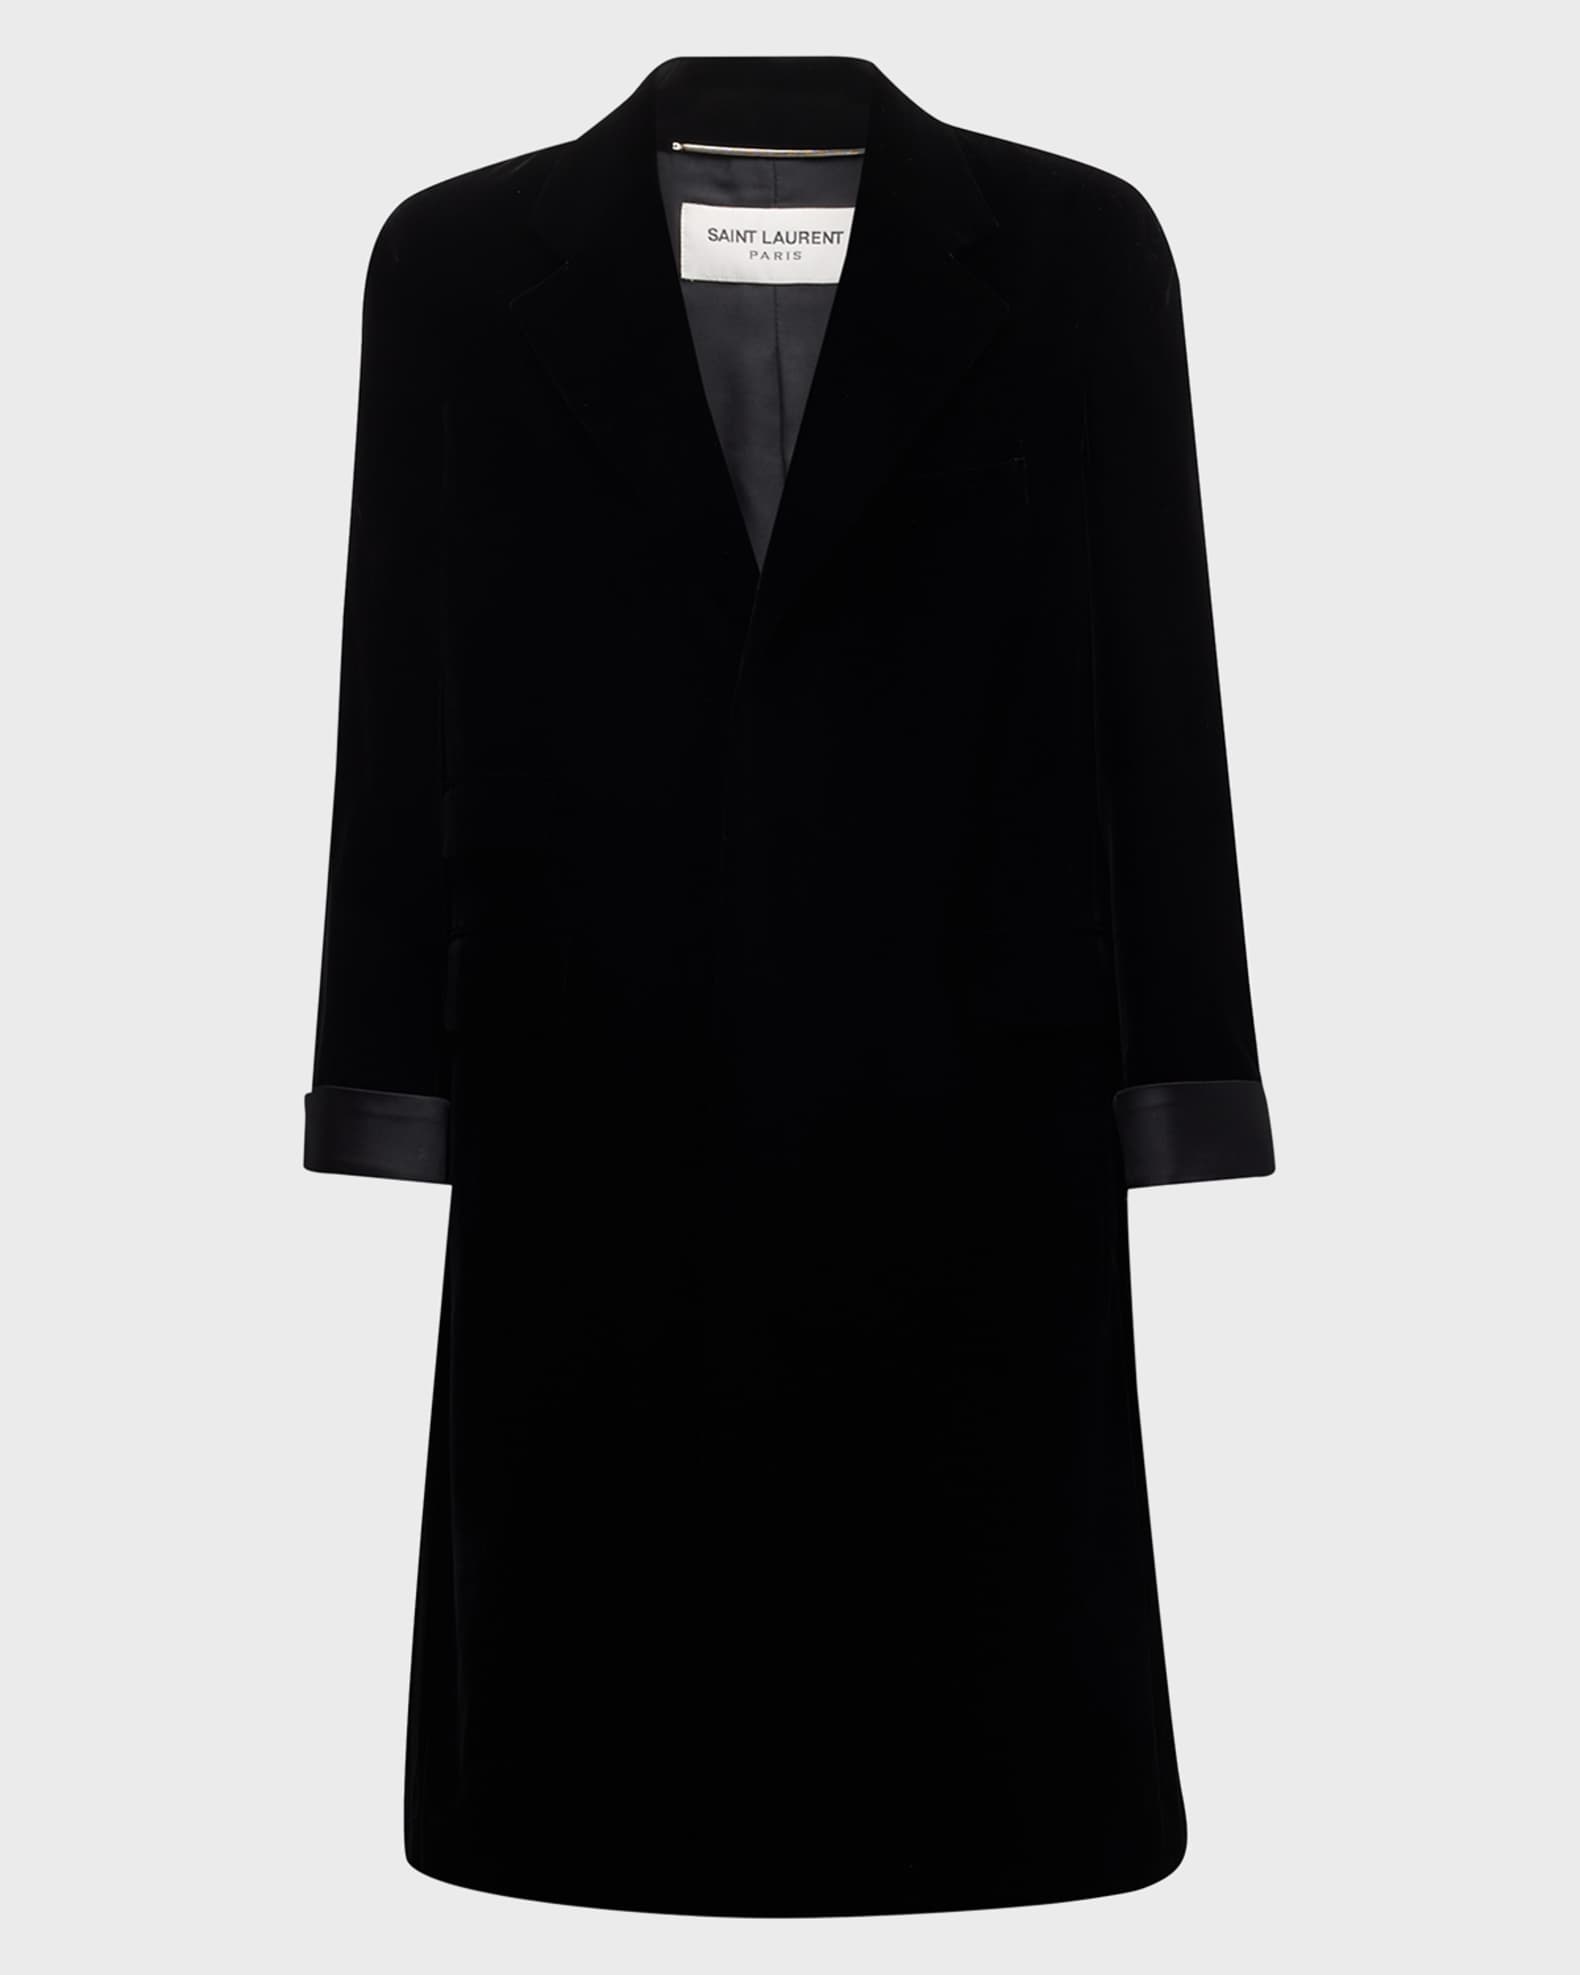 Saint Laurent Men's Oversized Satin-Trim Velvet Coat | Neiman Marcus